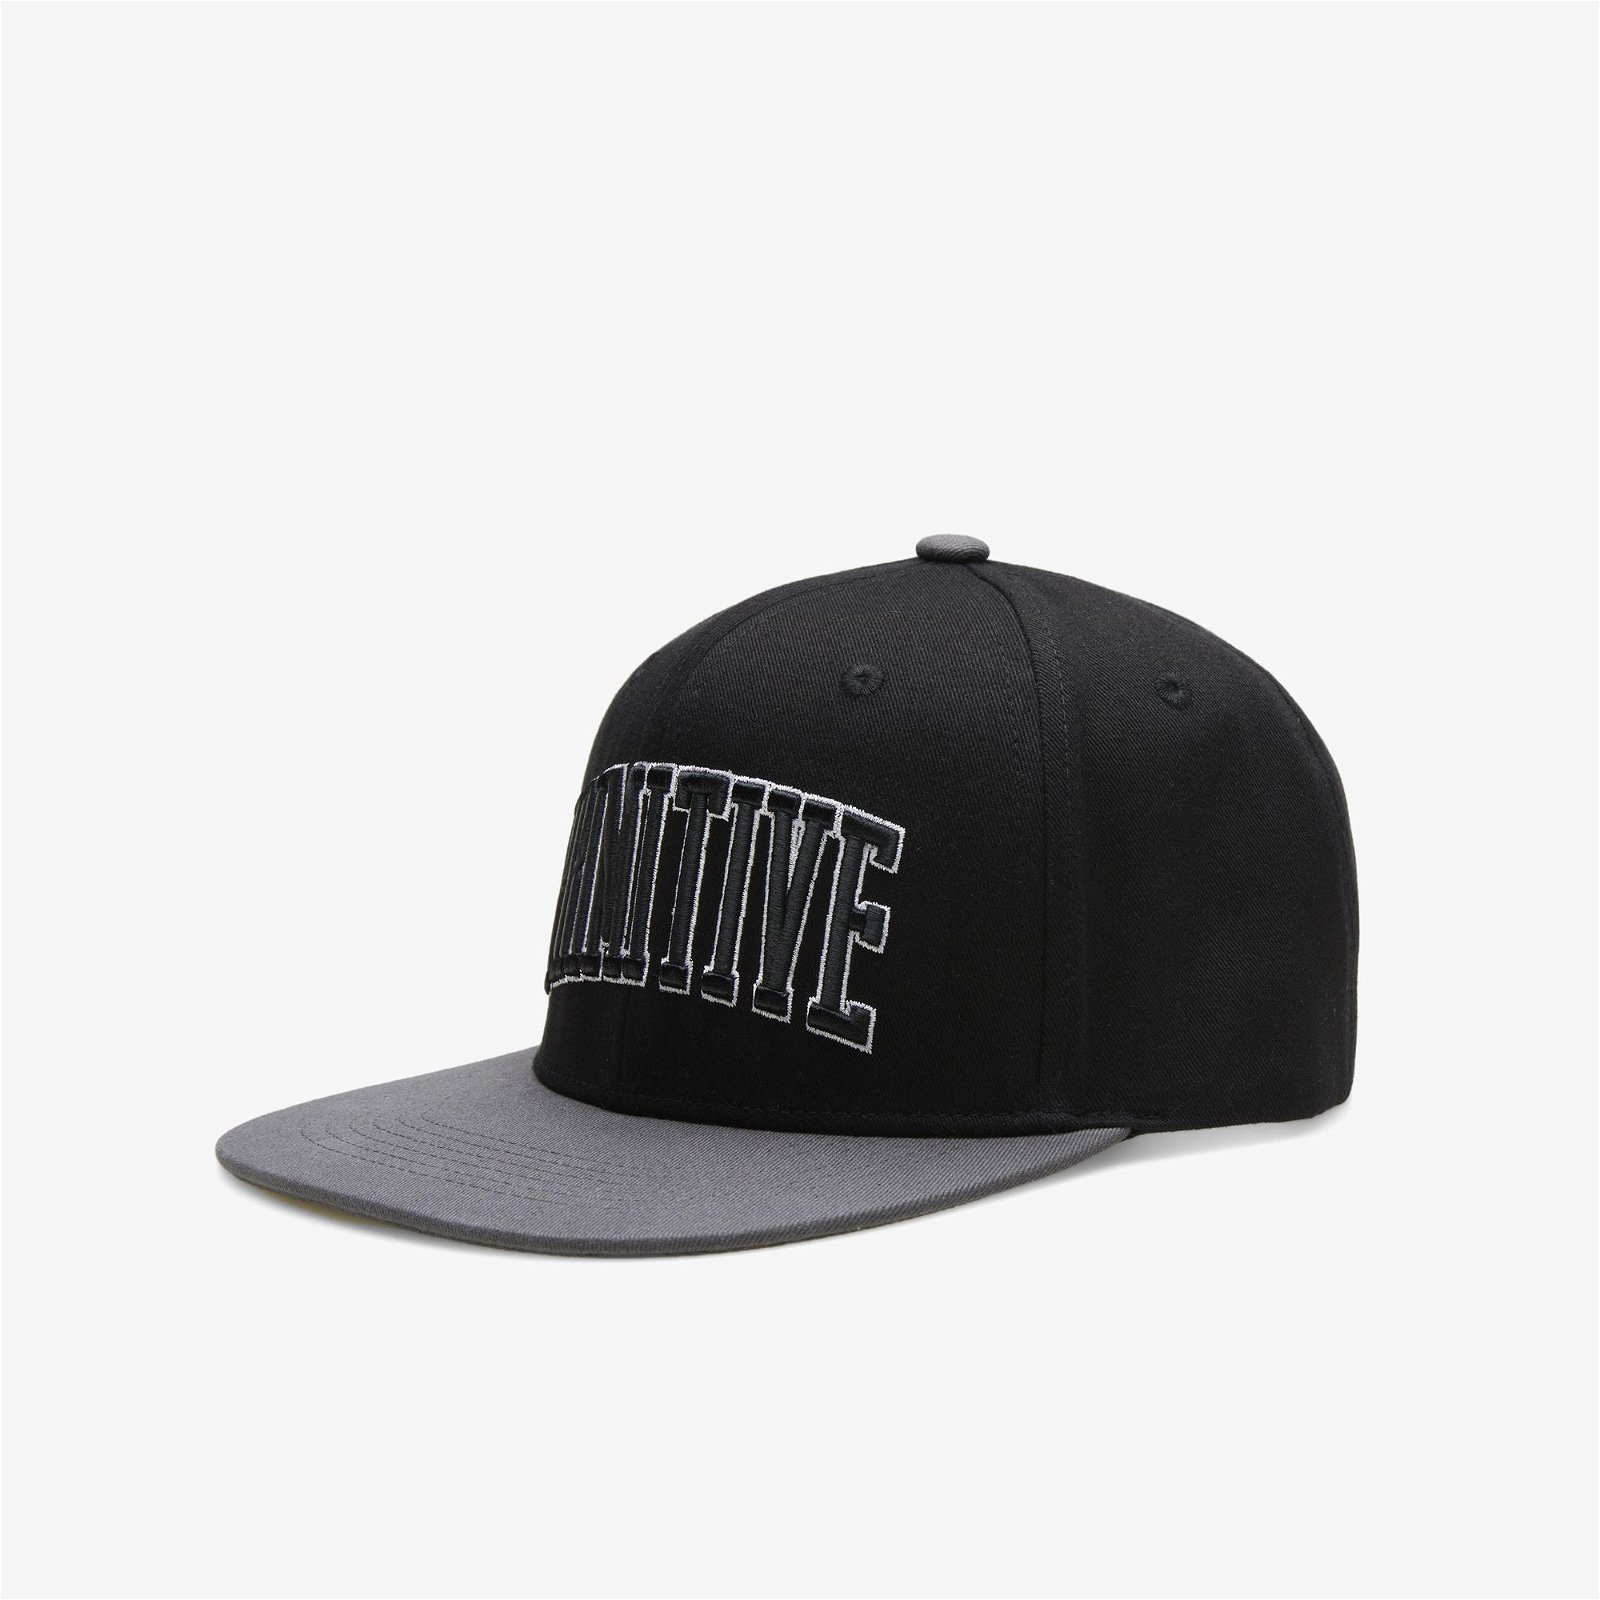 Primitive Collegiate Arch Unisex Siyah Şapka